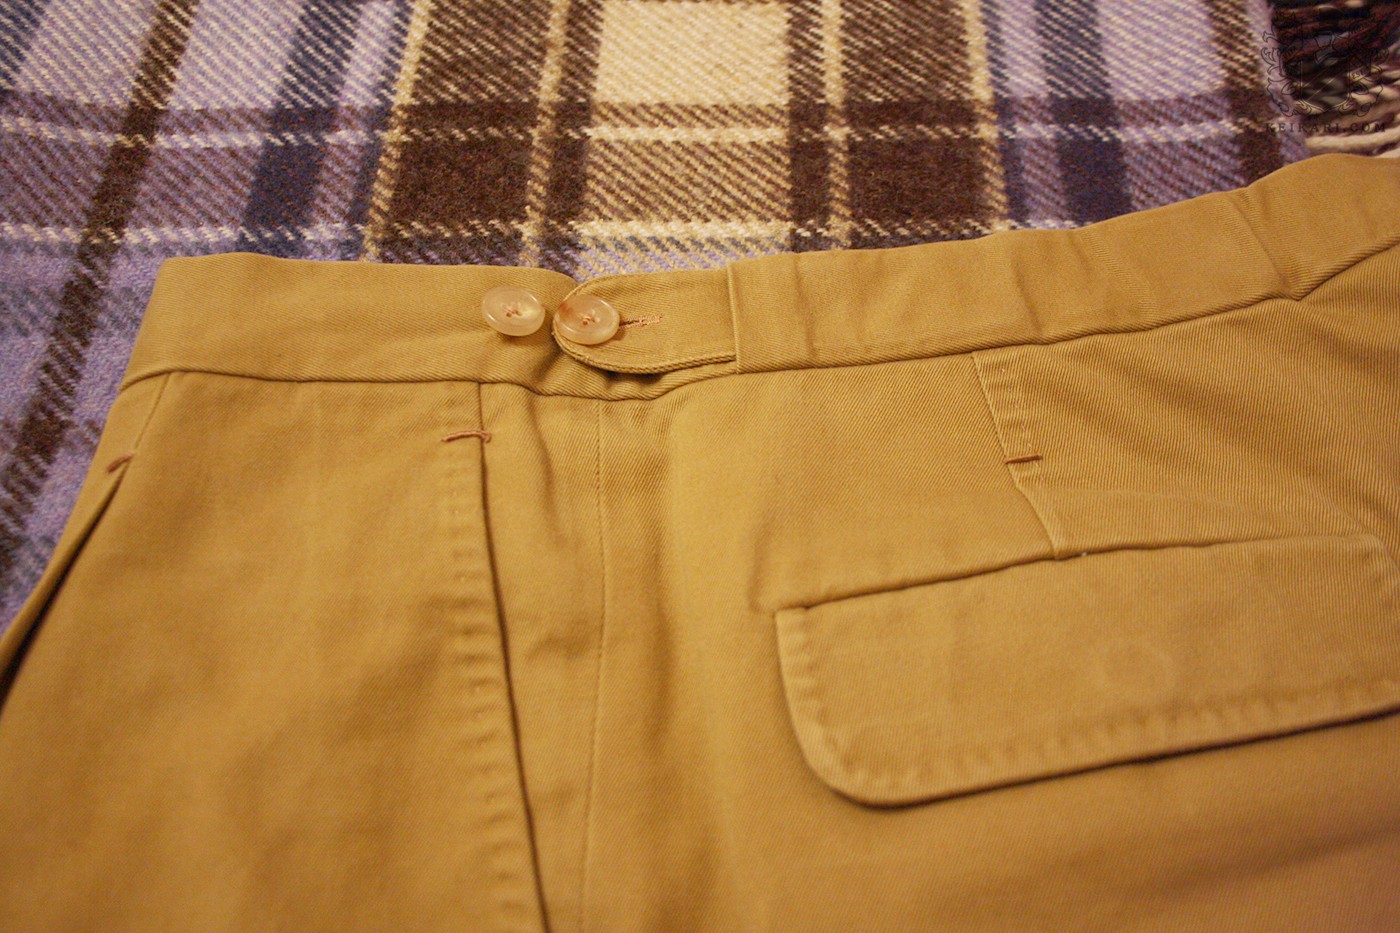 Vintage DAKS Trousers